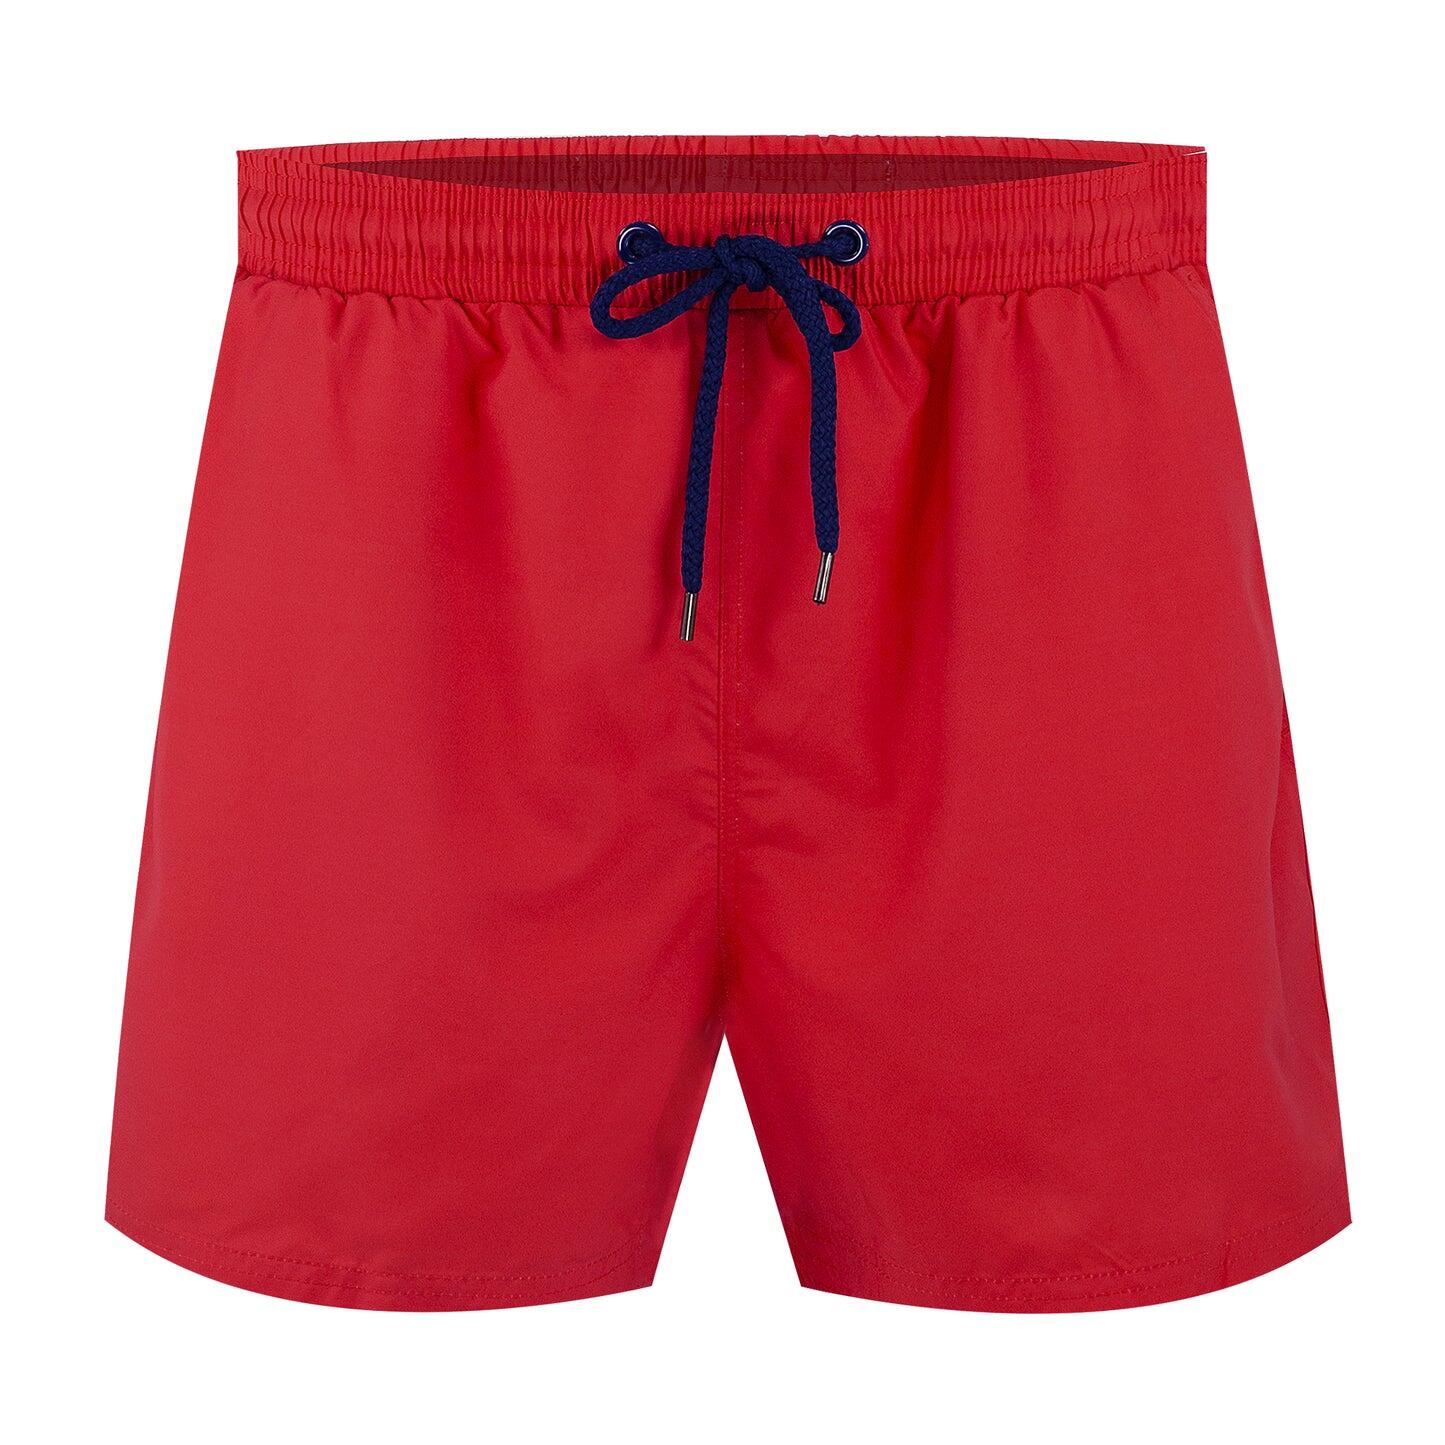 Balmoral Red Men's Swim Shorts